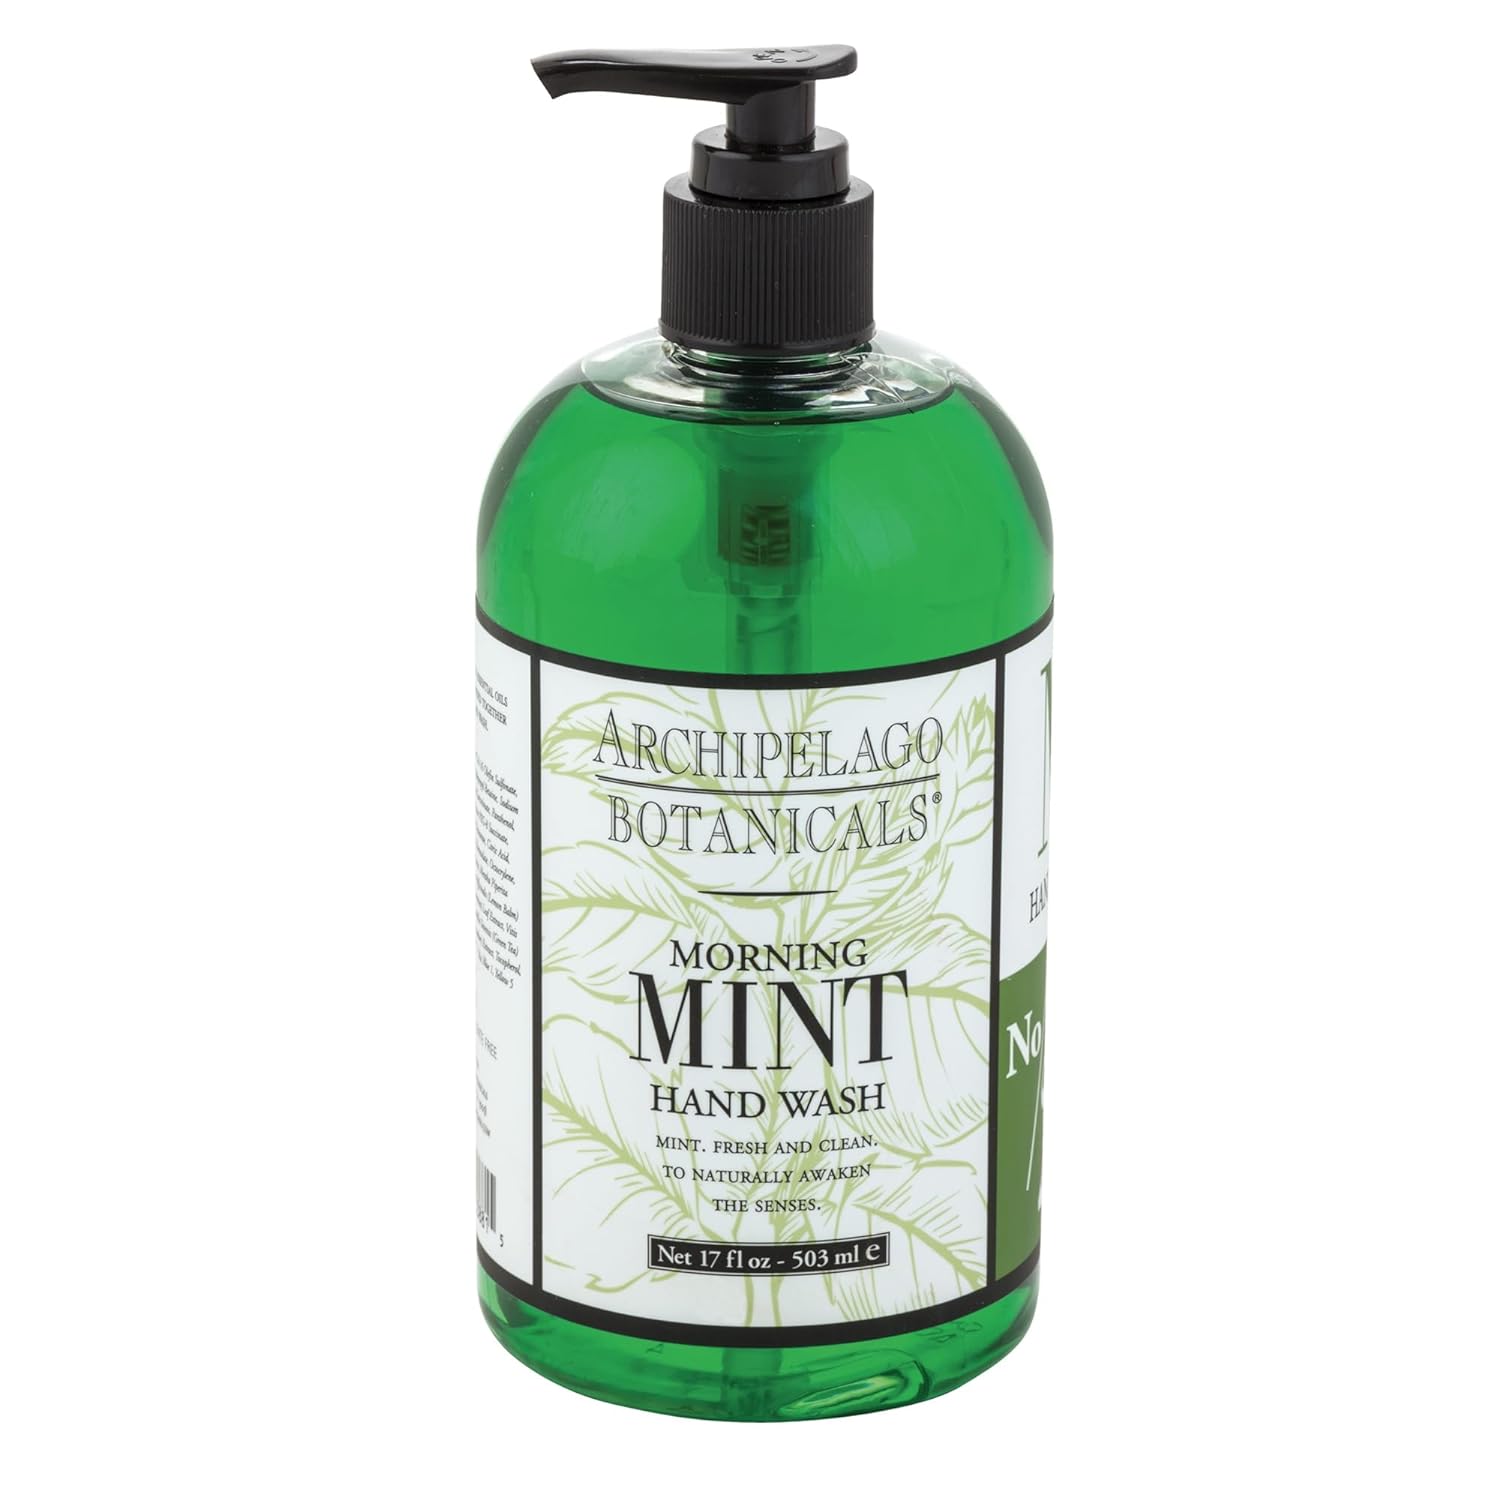 Archipelago Botanicals Morning Mint Hand Wash. Gentle Daily Handwash to Detoxify and Hydrate Skin (17 fl oz)